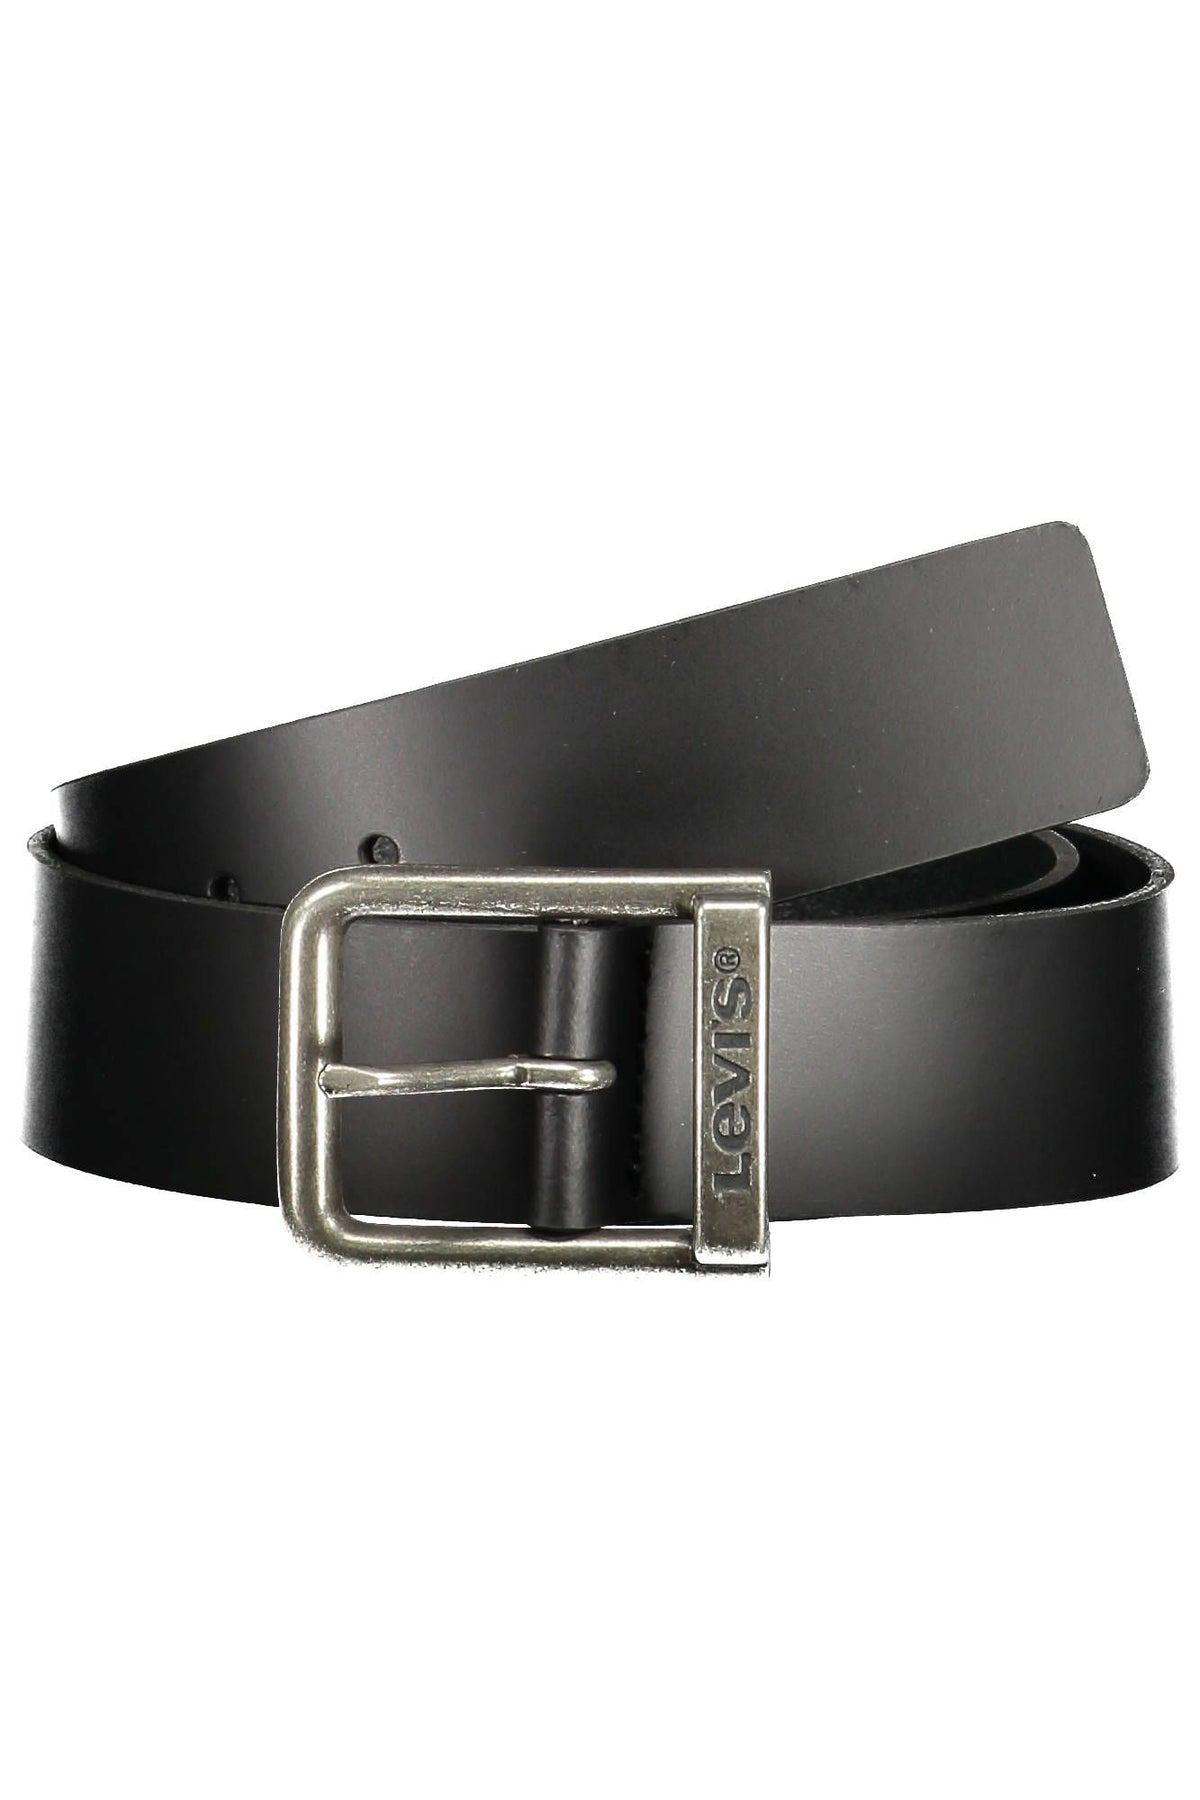 Levi's Sleek Black Leather Belt with Metal Buckle